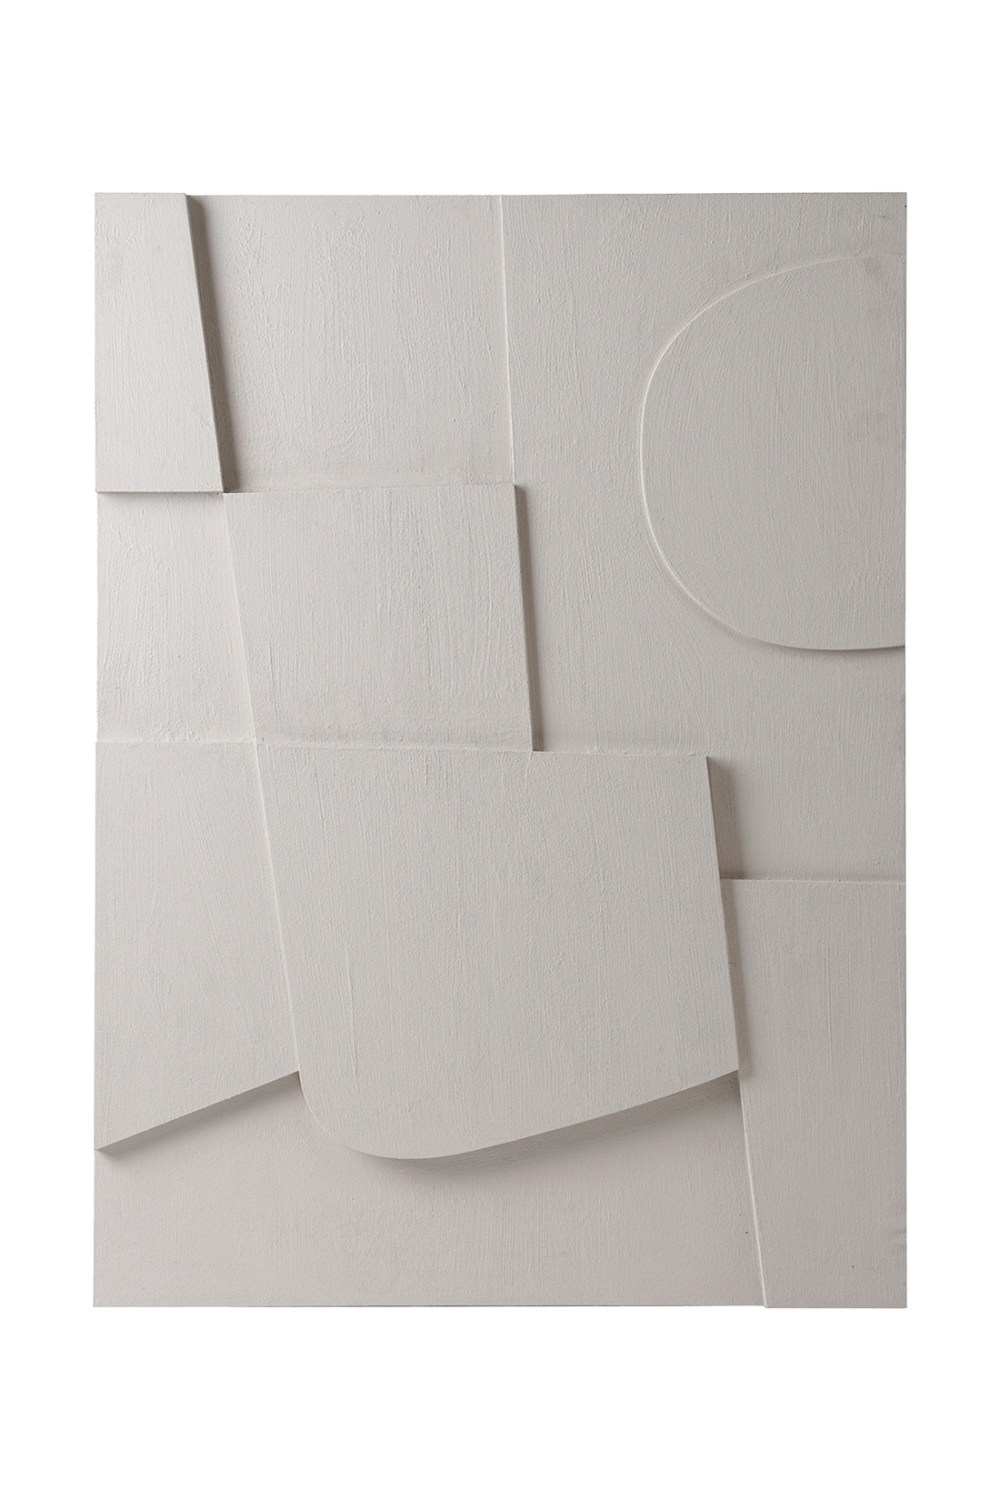 White Embossed Painting | Liang & Eimil Cottara | Oroa.com